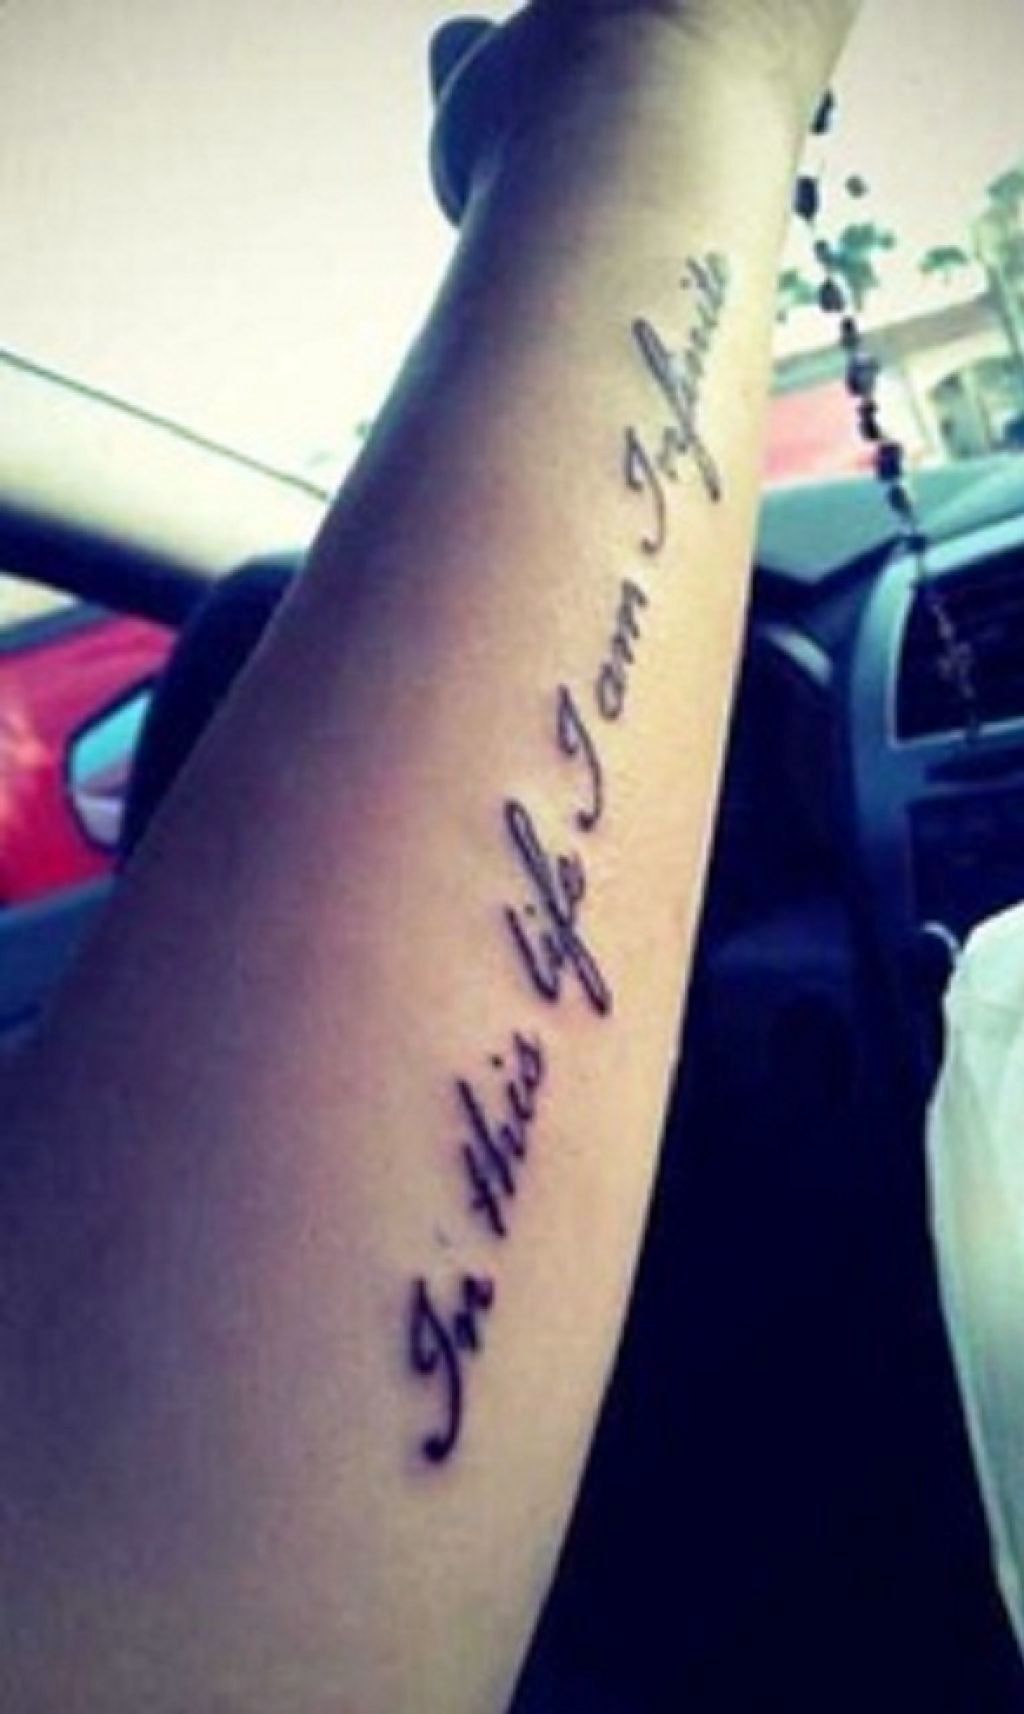 Life_quotes_tattoos_on_wrist-4